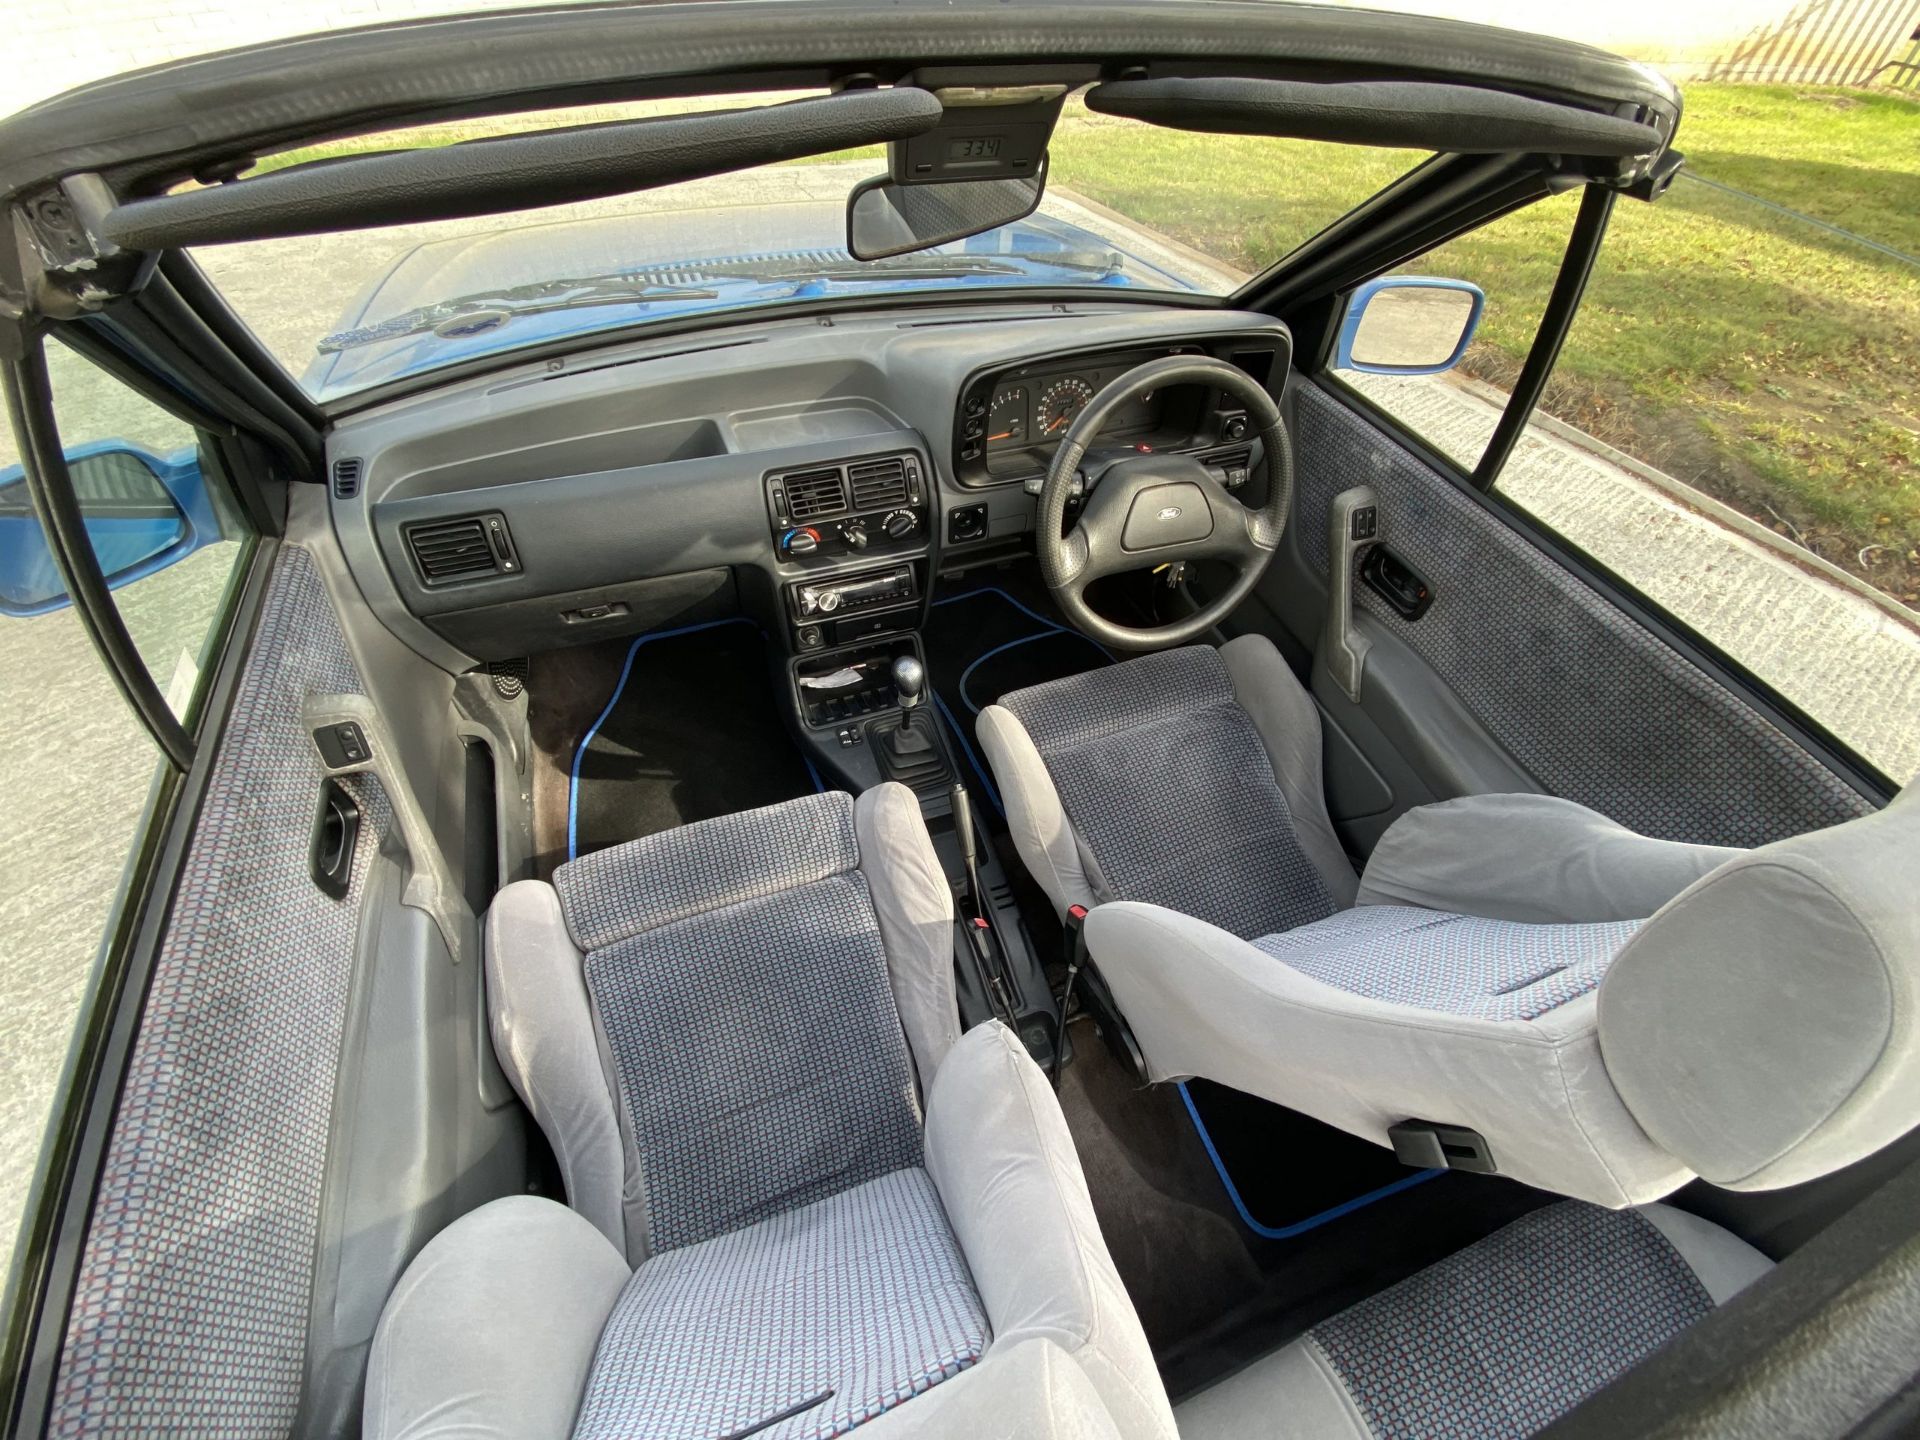 Ford Escort XR3i - Image 24 of 26